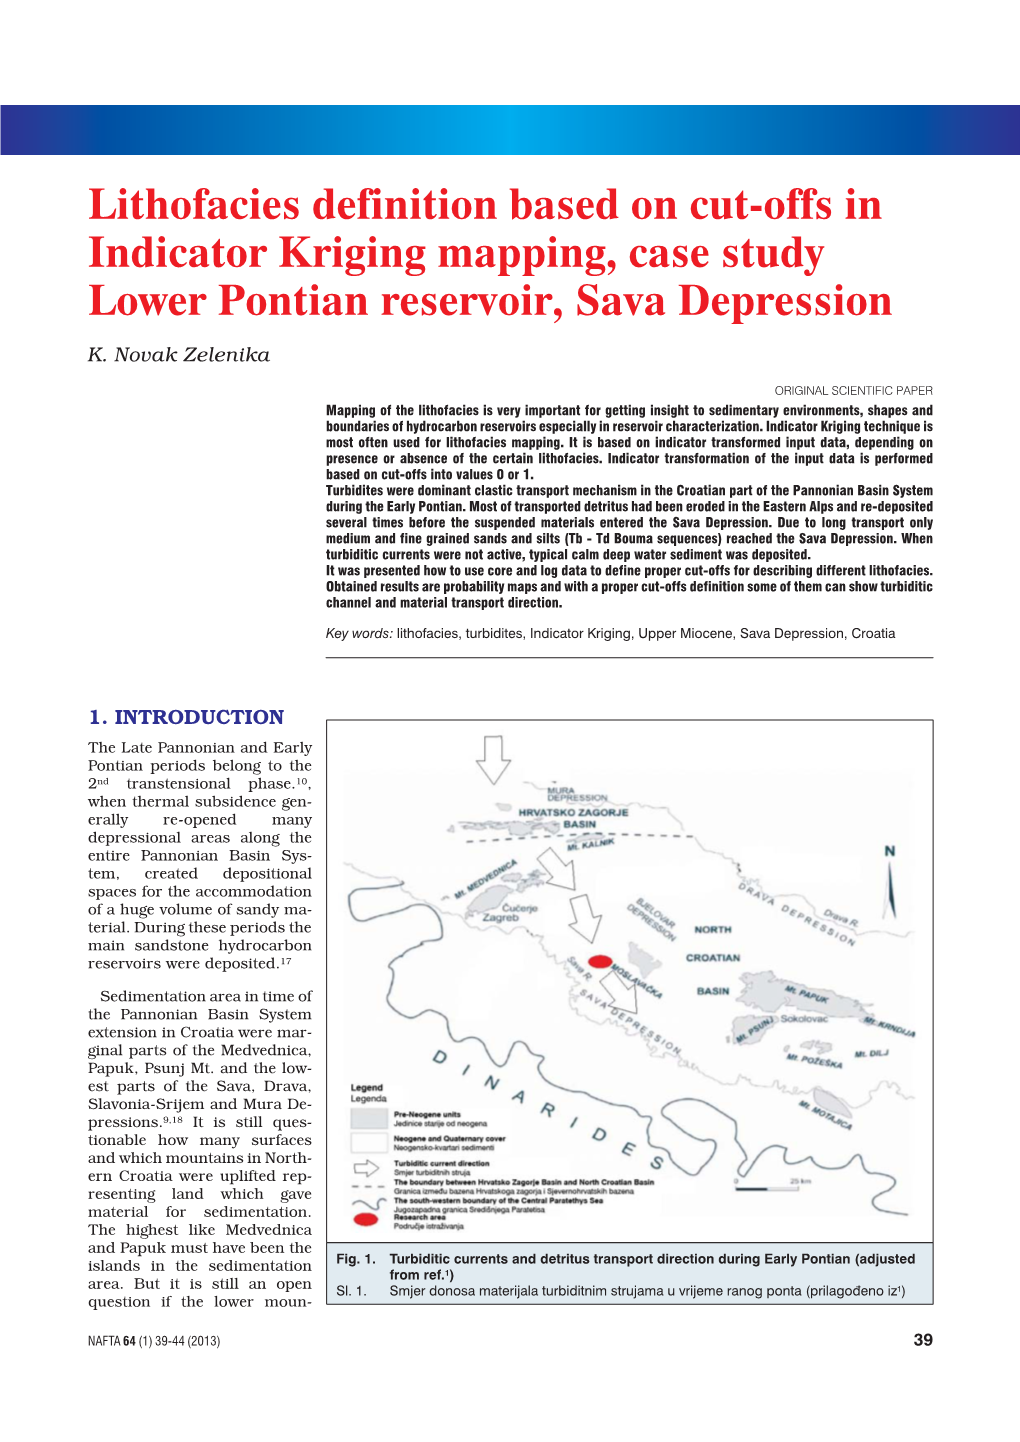 Lithofacies Definition Based on Cut-Offs in Indicator Kriging Mapping, Case Study Lower Pontian Reservoir, Sava Depression K